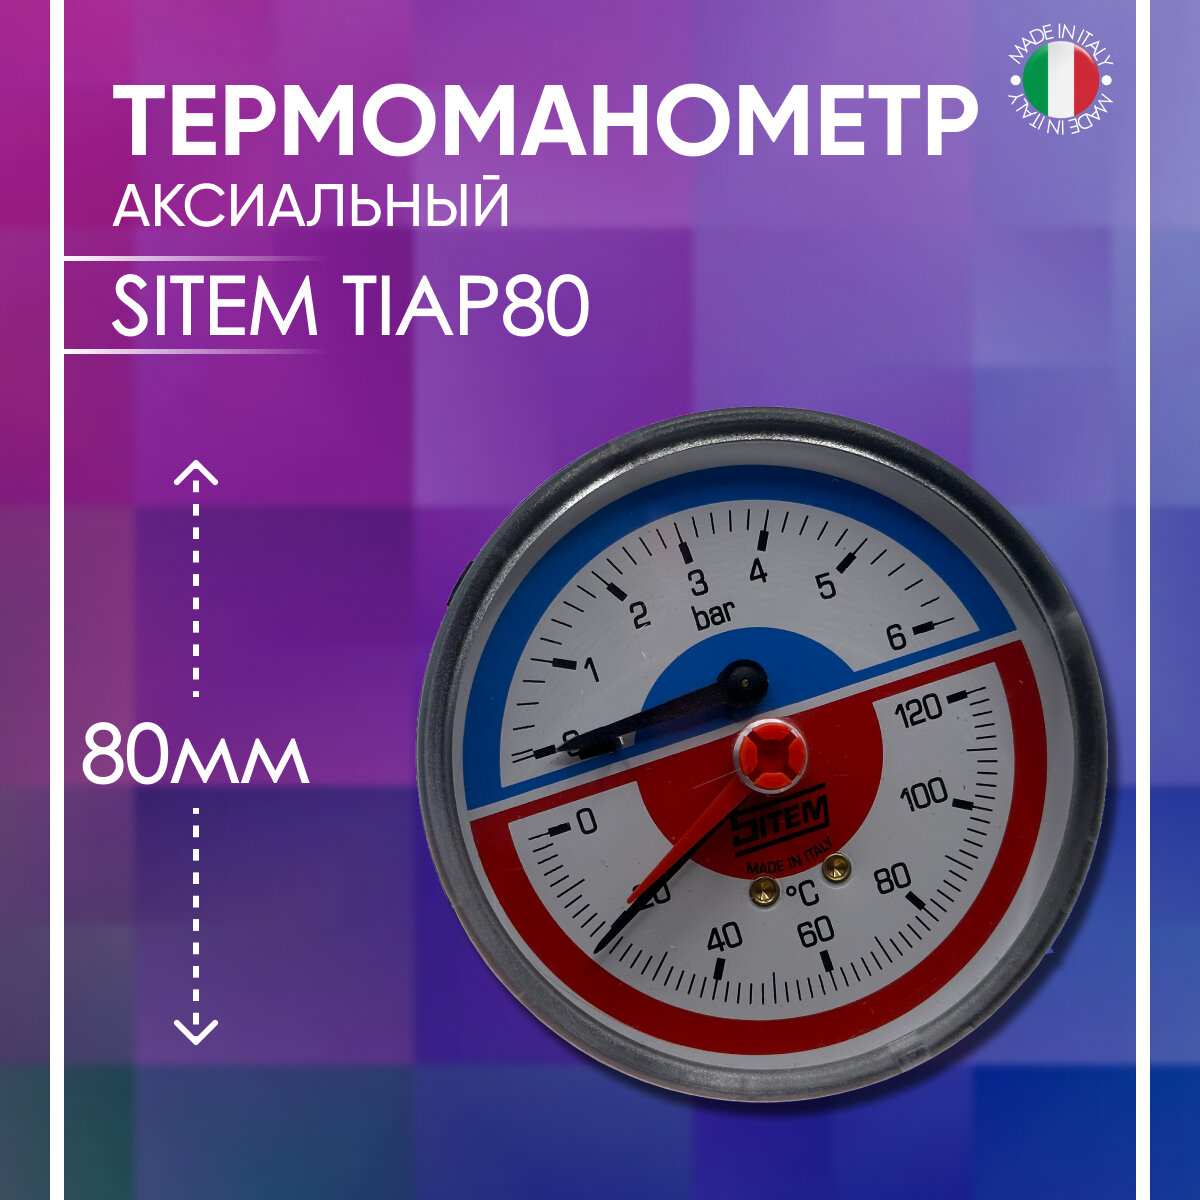 Термоманометр аксиальный диаметр 80 мм SITEM артикул TIAP80 1/2" х 6 бар/120*C